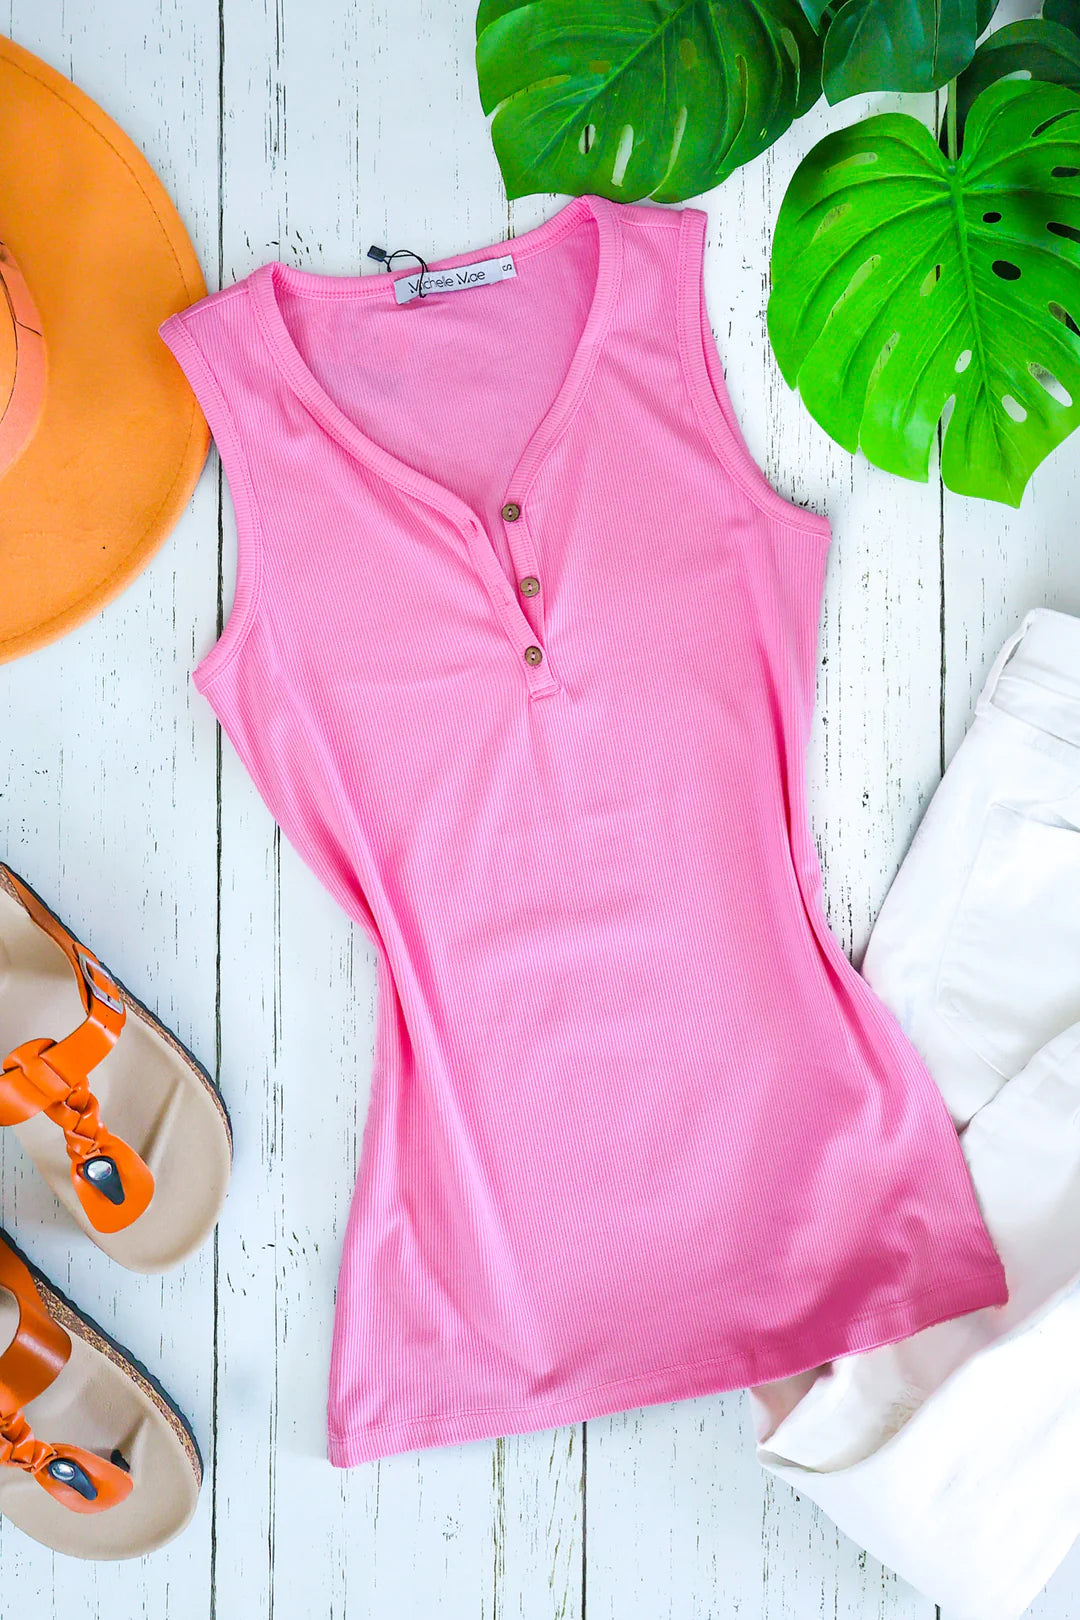 Addison Henley Tank- Bright Pink - Shop women apparel, Jewelry, bath & beauty products online - Arwen's Boutique